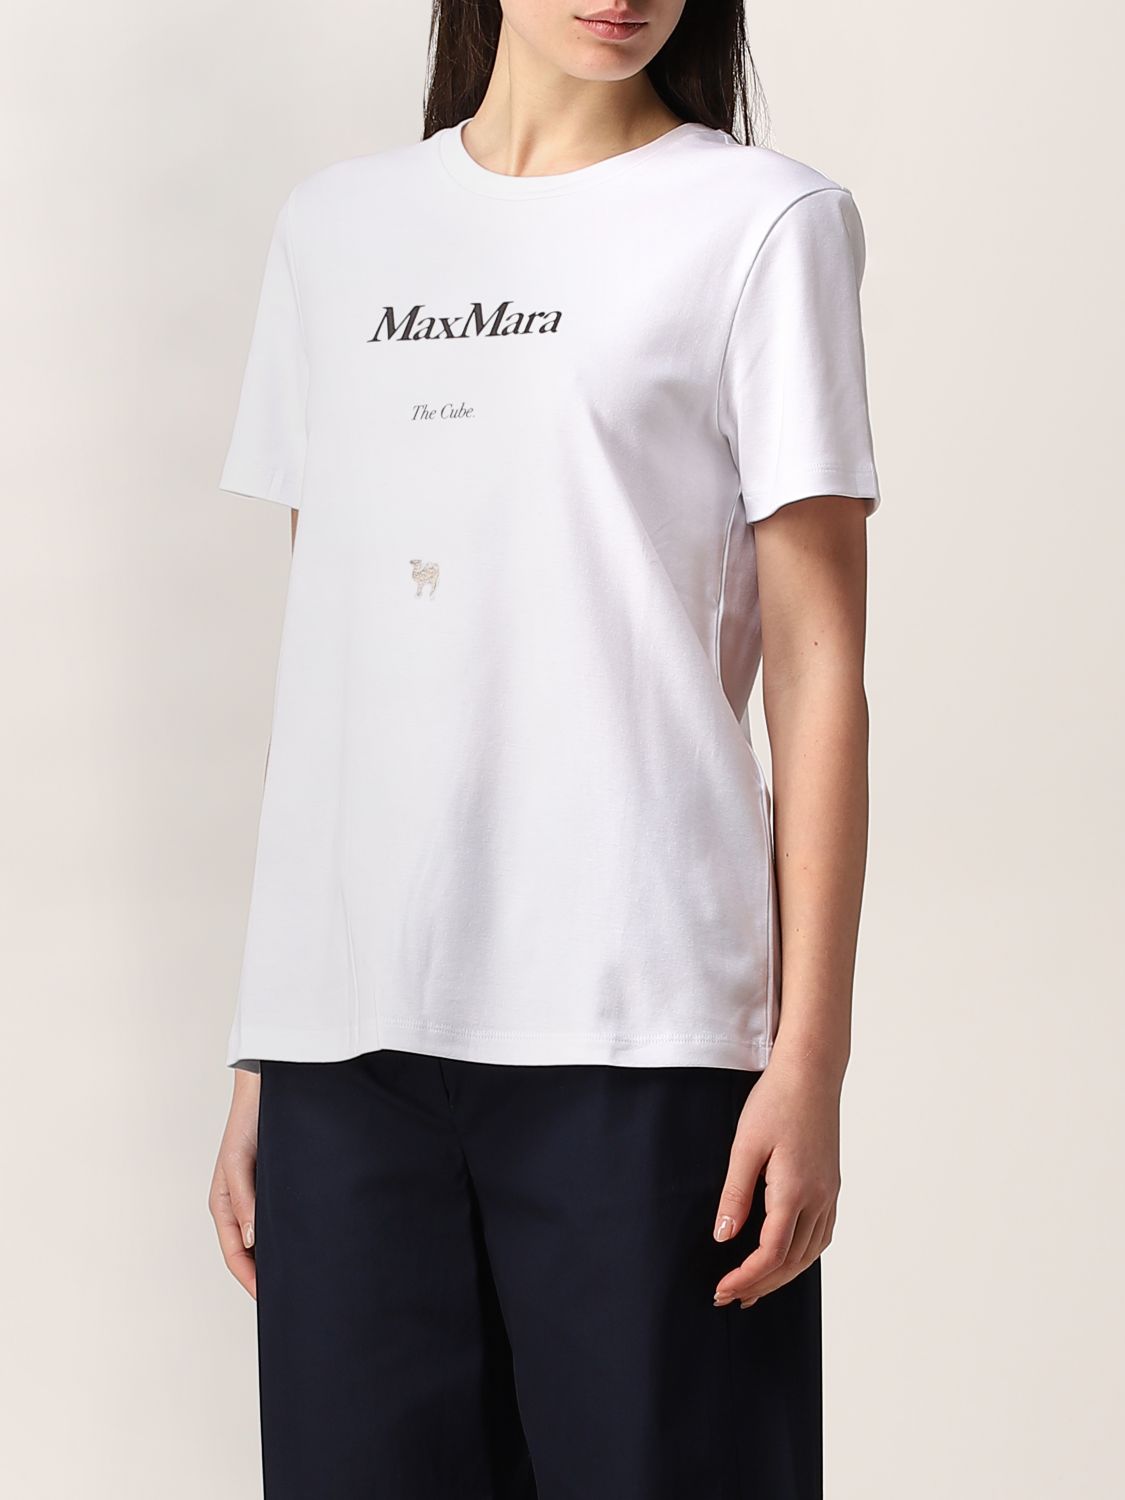 Max Mara Tシャツ ホワイト L | vrealitybolivia.com